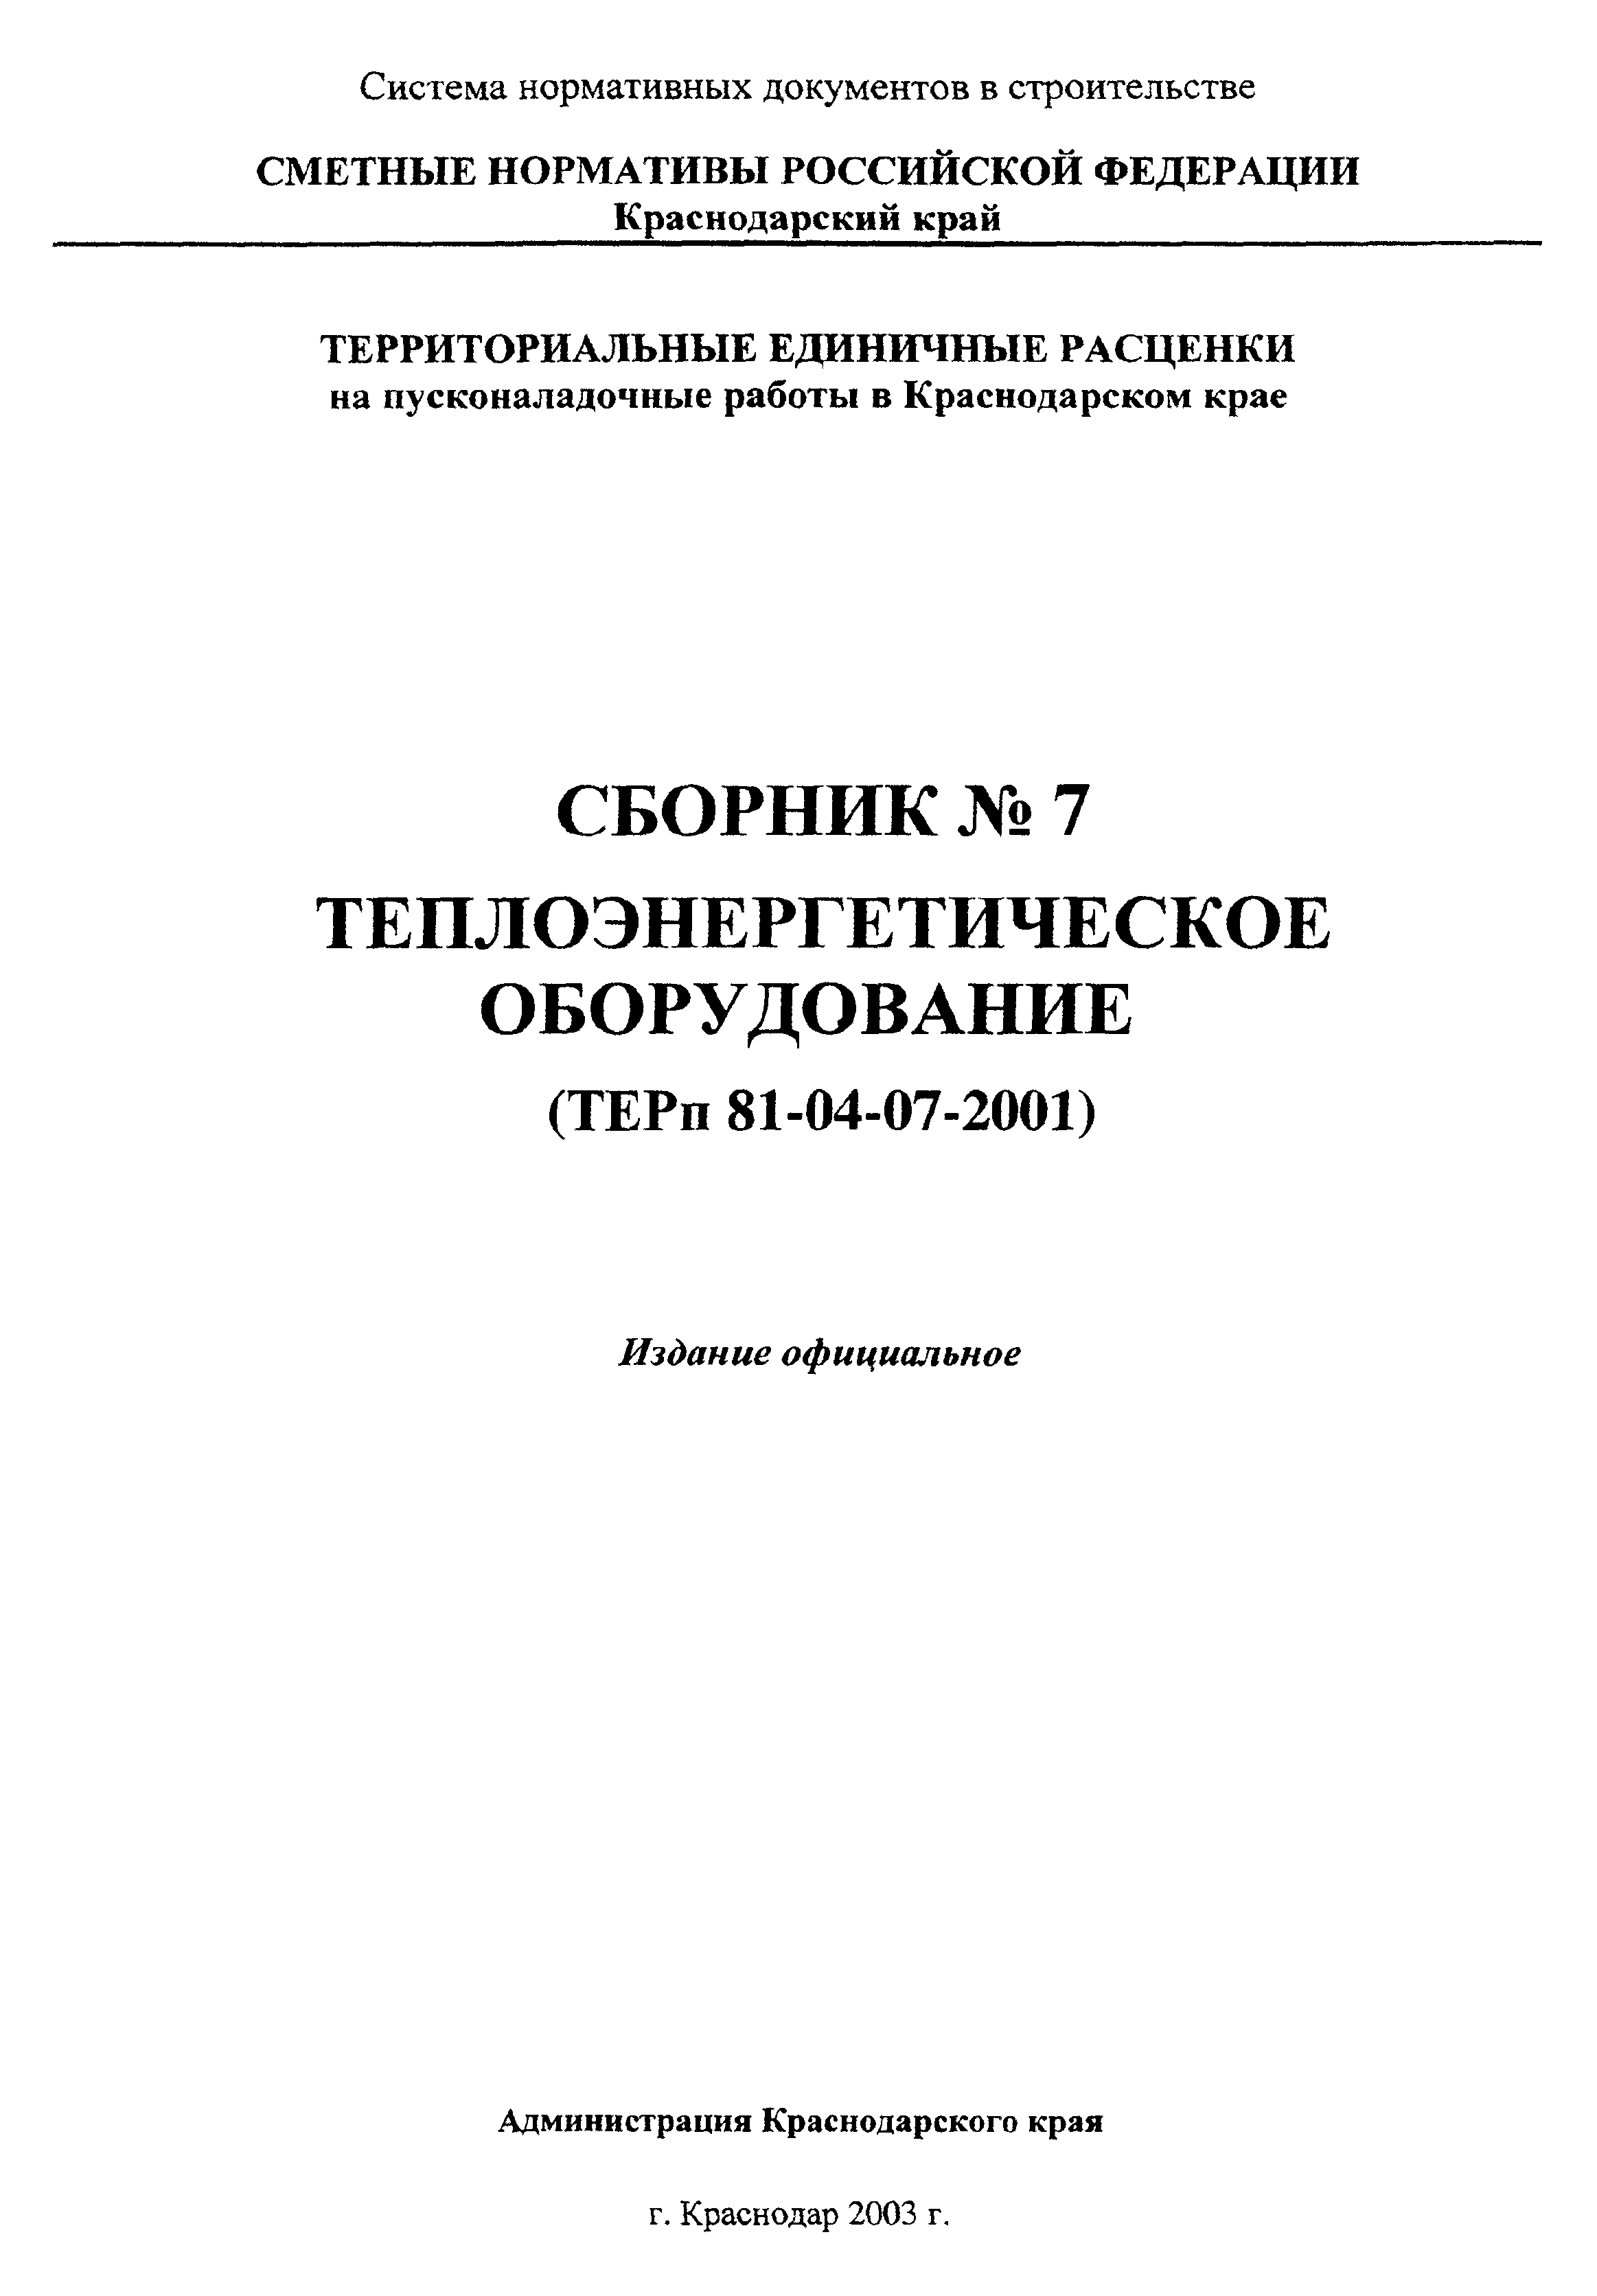 ТЕРп Краснодарского края 2001-07